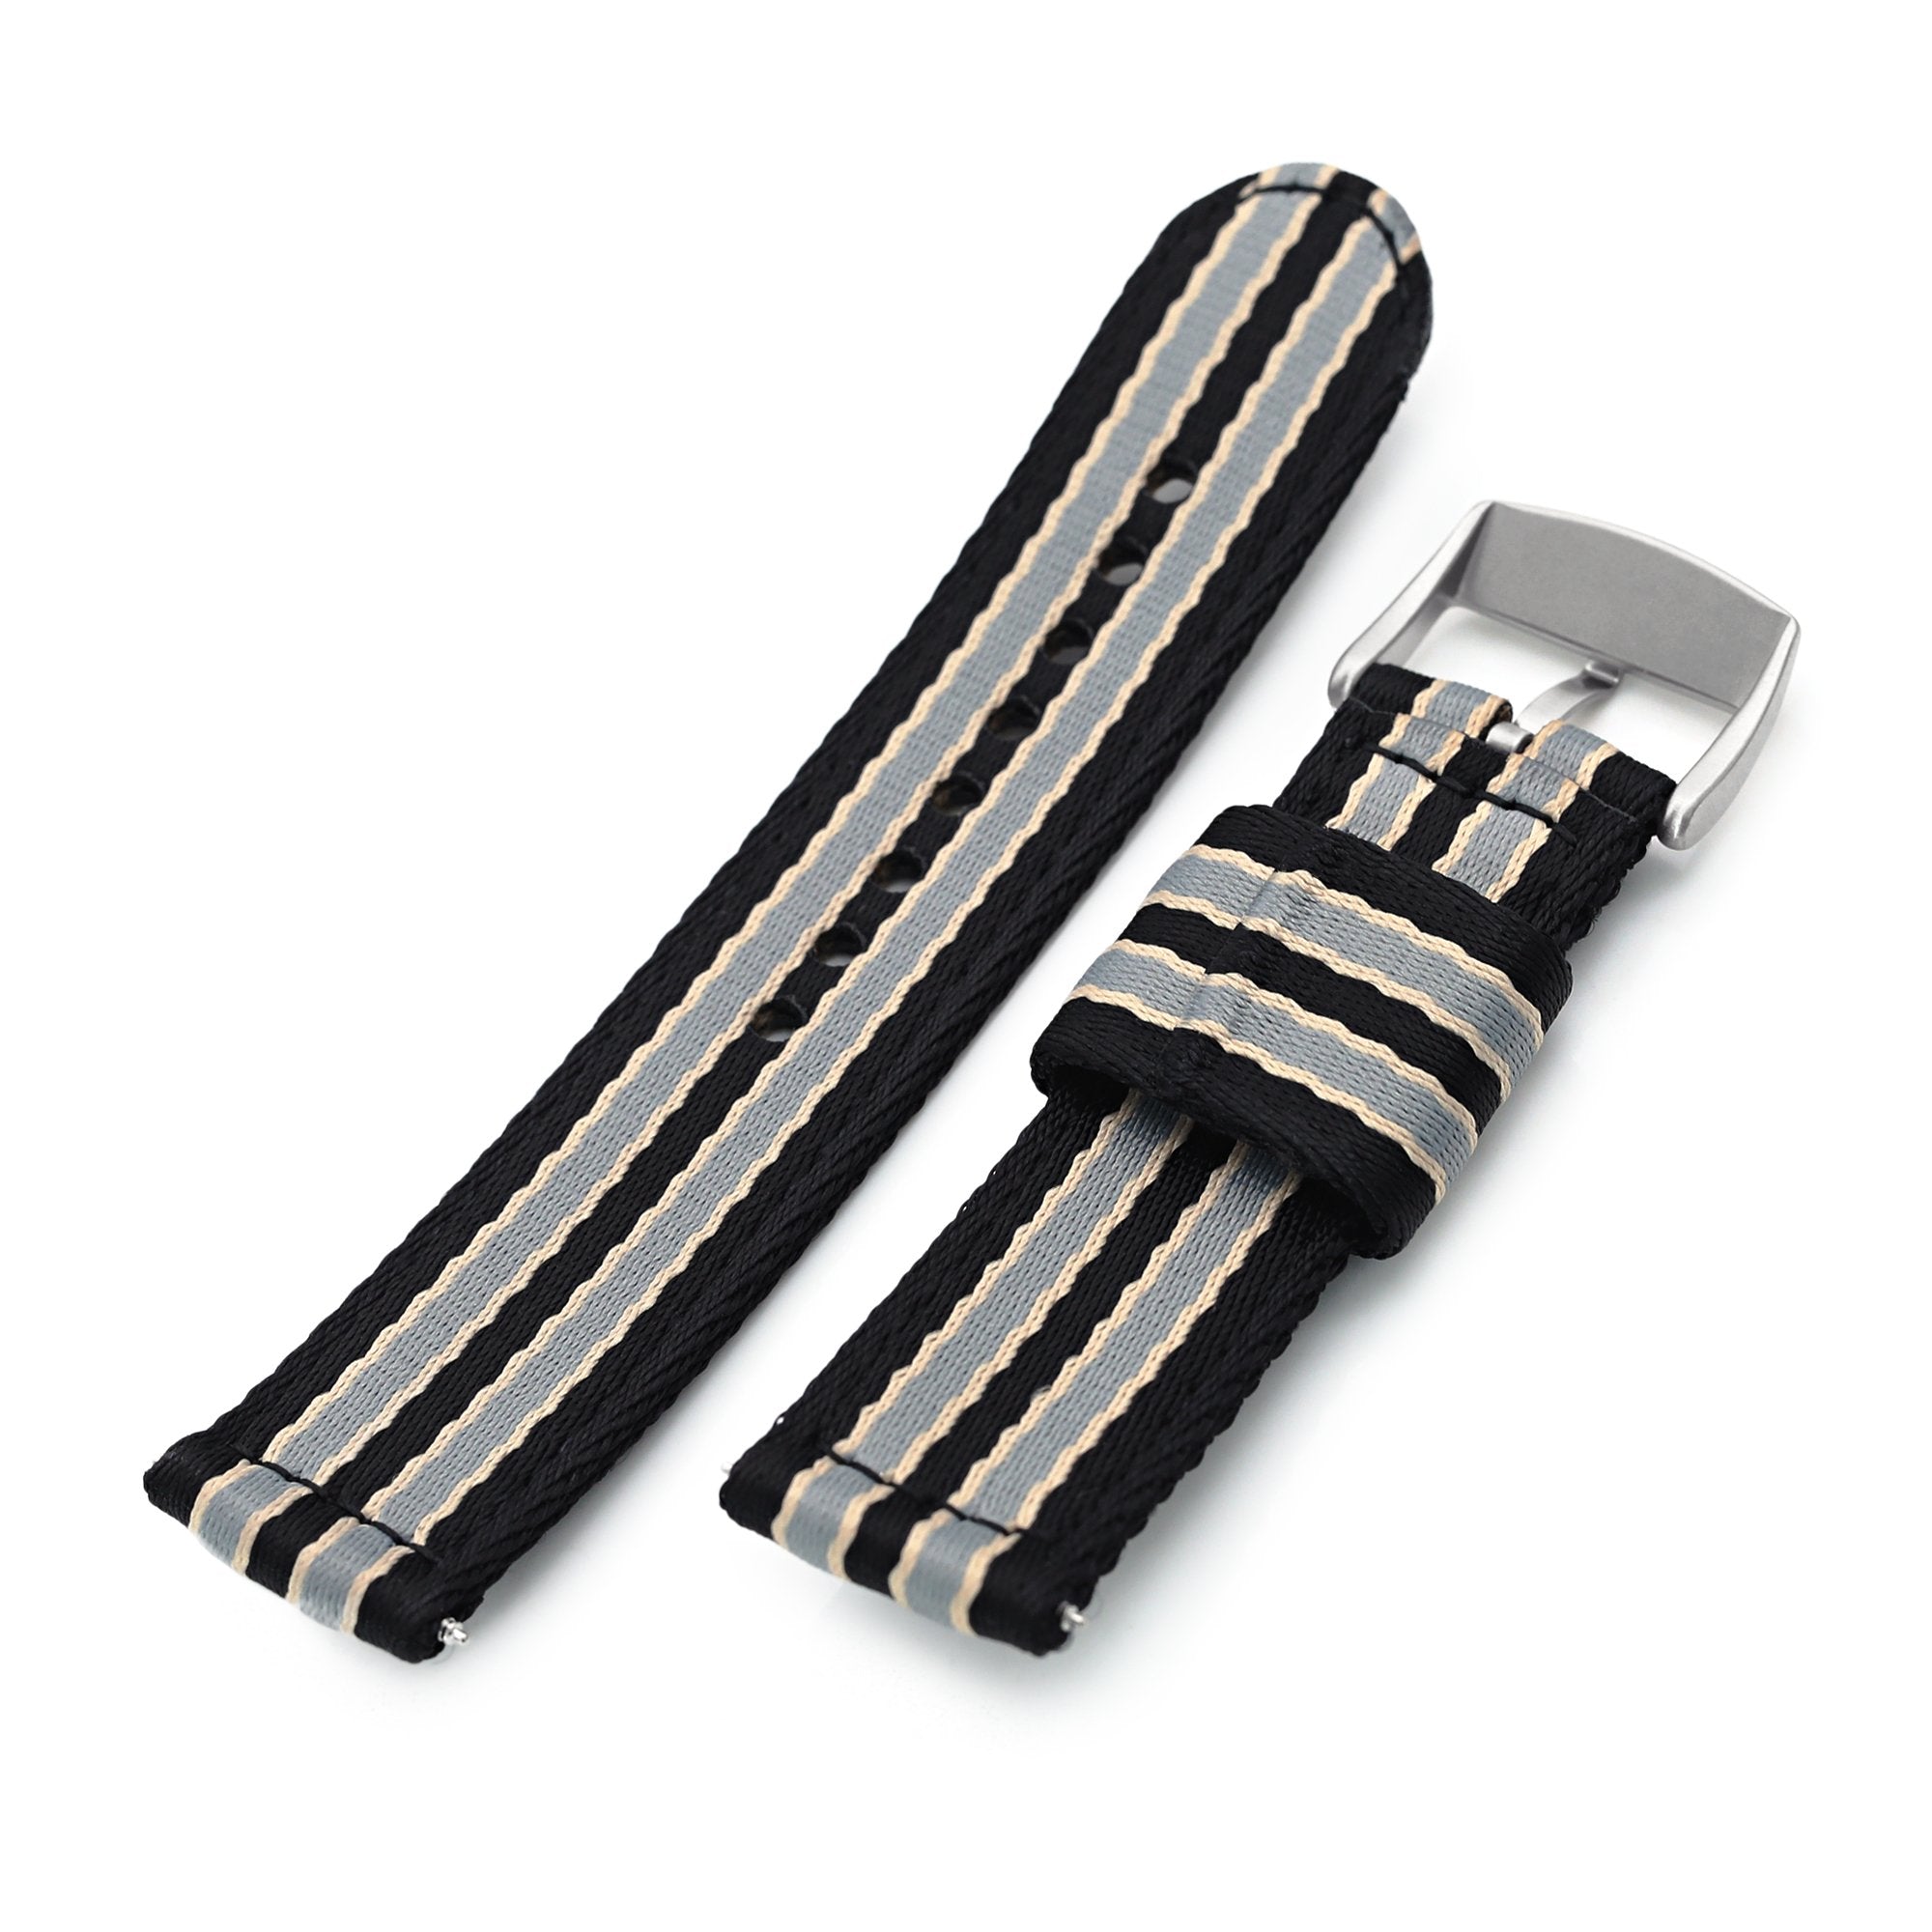 22mm 2-pcs Seatbelt Nylon Watch Band, Black, Grey and Khaki Stripes, Brushed Buckle Strapcode Watch Bands